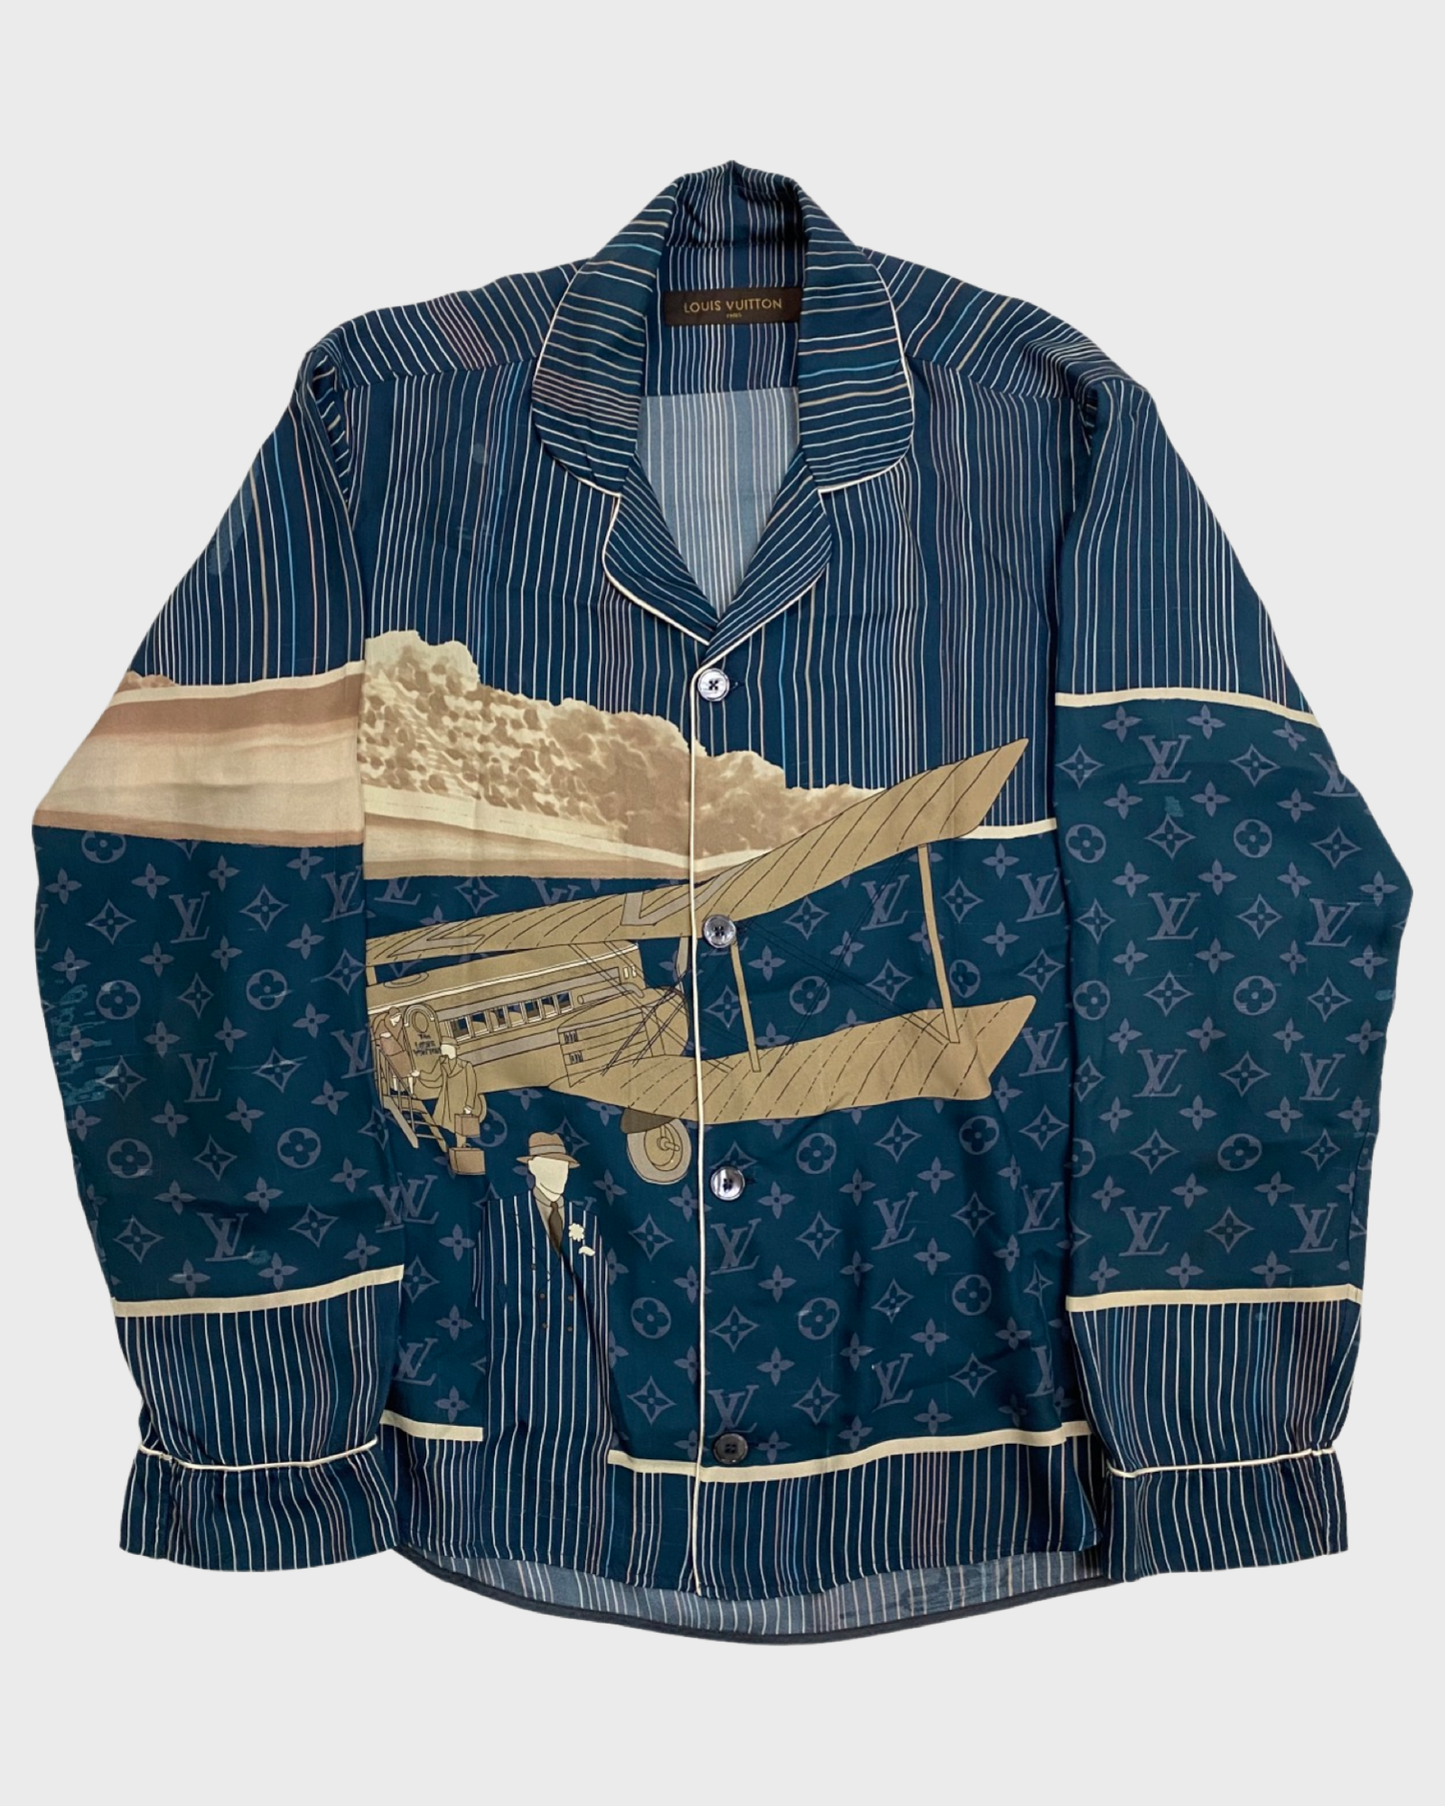 LOUIS VUITTON AW17 Monogram Airplane PYJAMA Silk Shirt Kim Jones Era  Oversized